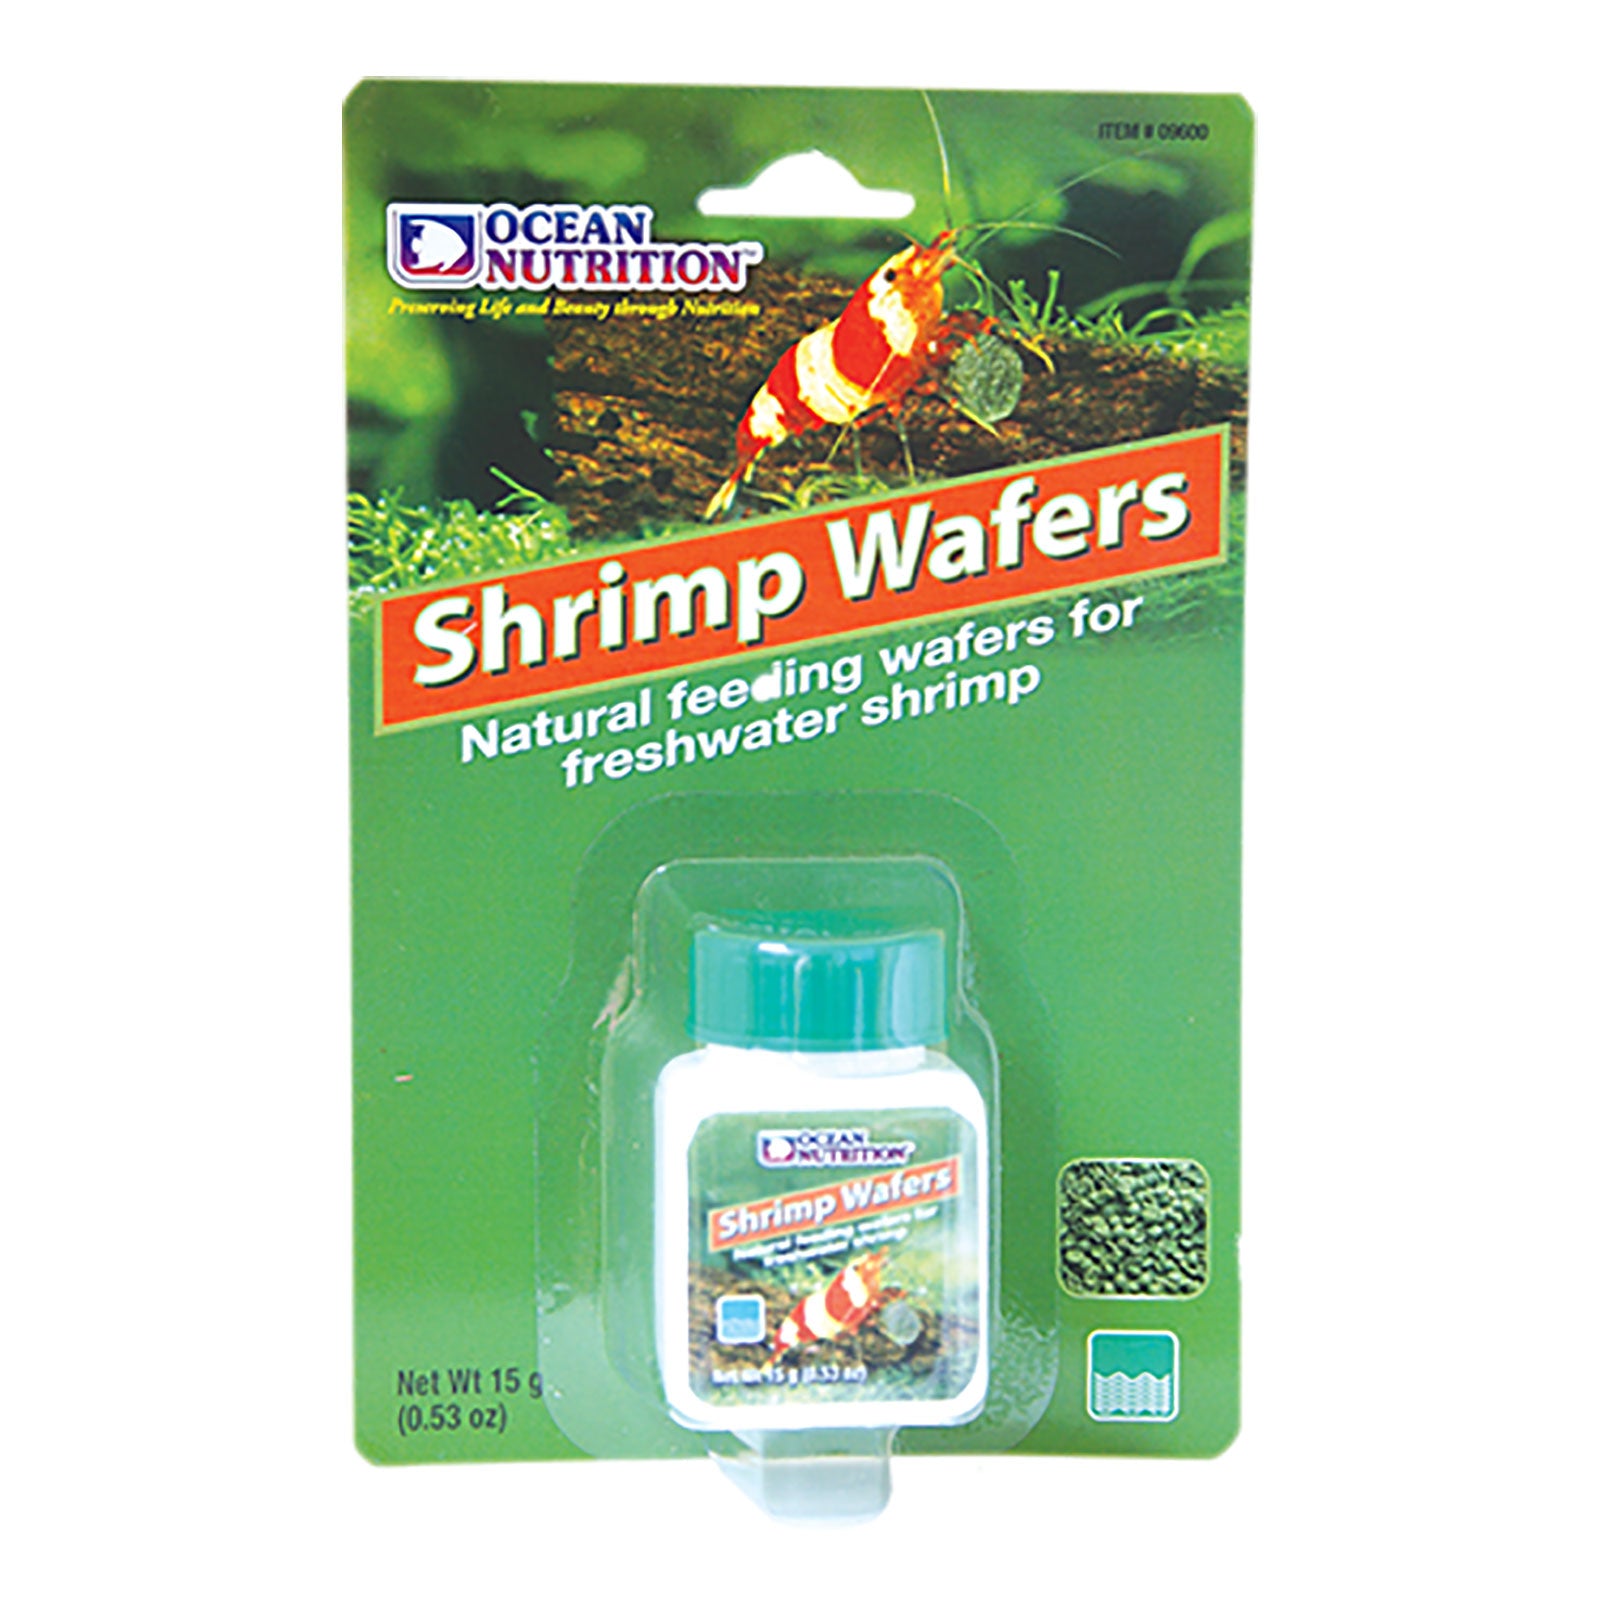 Ocean Nutrition Shrimp Wafers